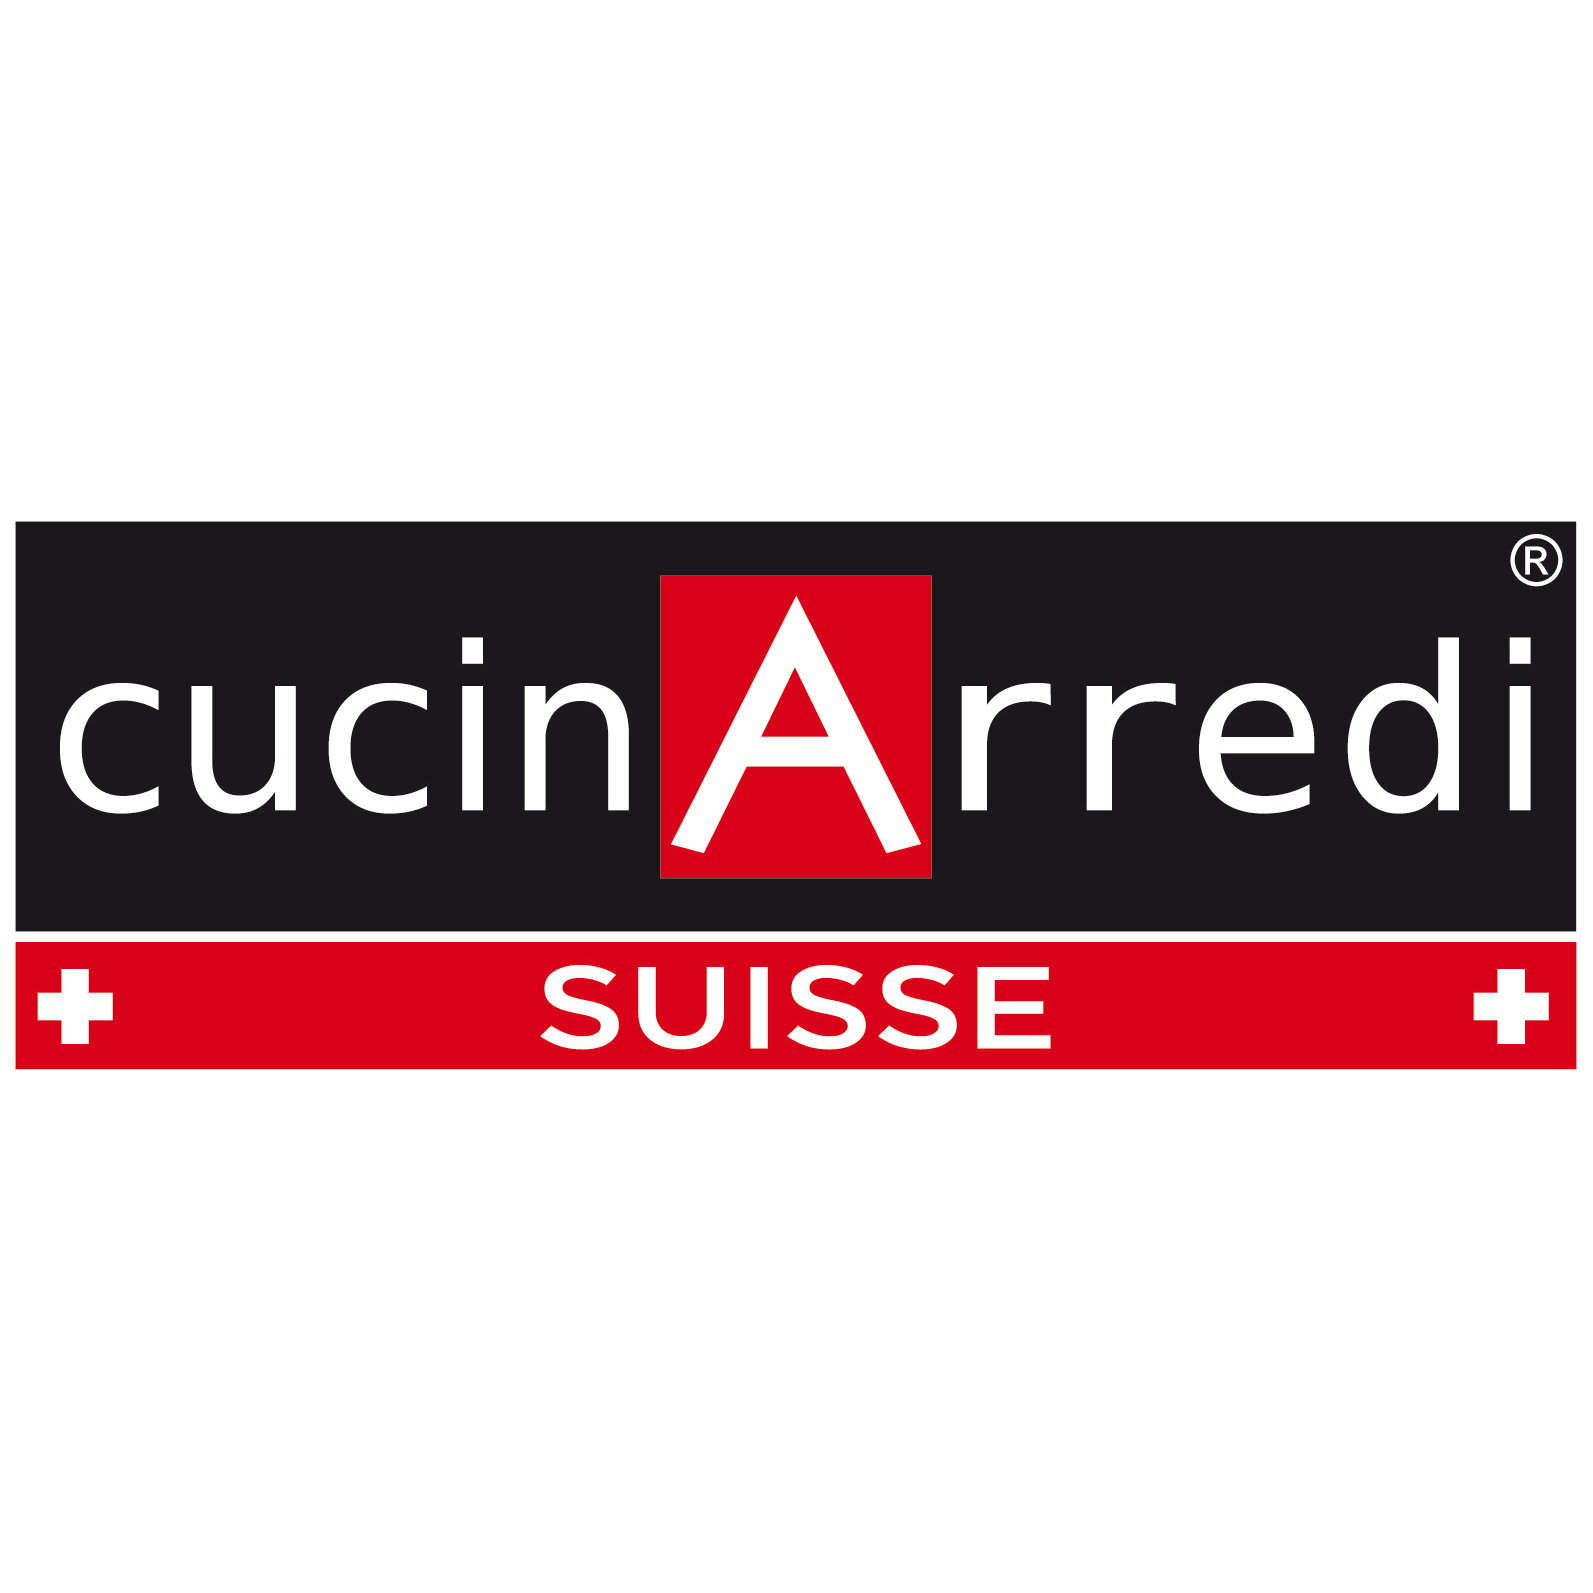 CUCINARREDI Suisse - Kitchen Remodeler - Lugano - 091 220 76 56 Switzerland | ShowMeLocal.com